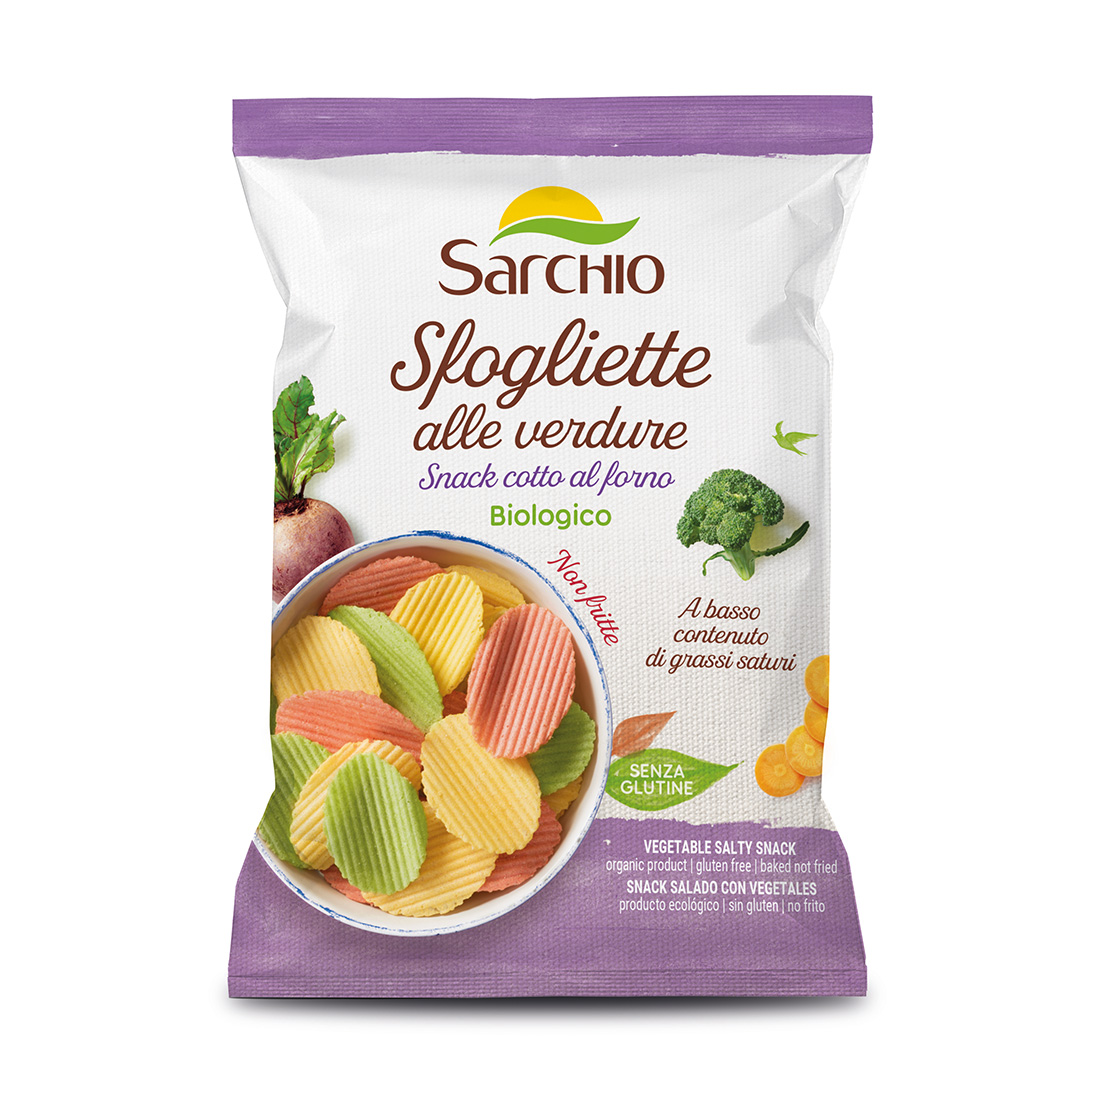 Sfogliette - Vegetable snack